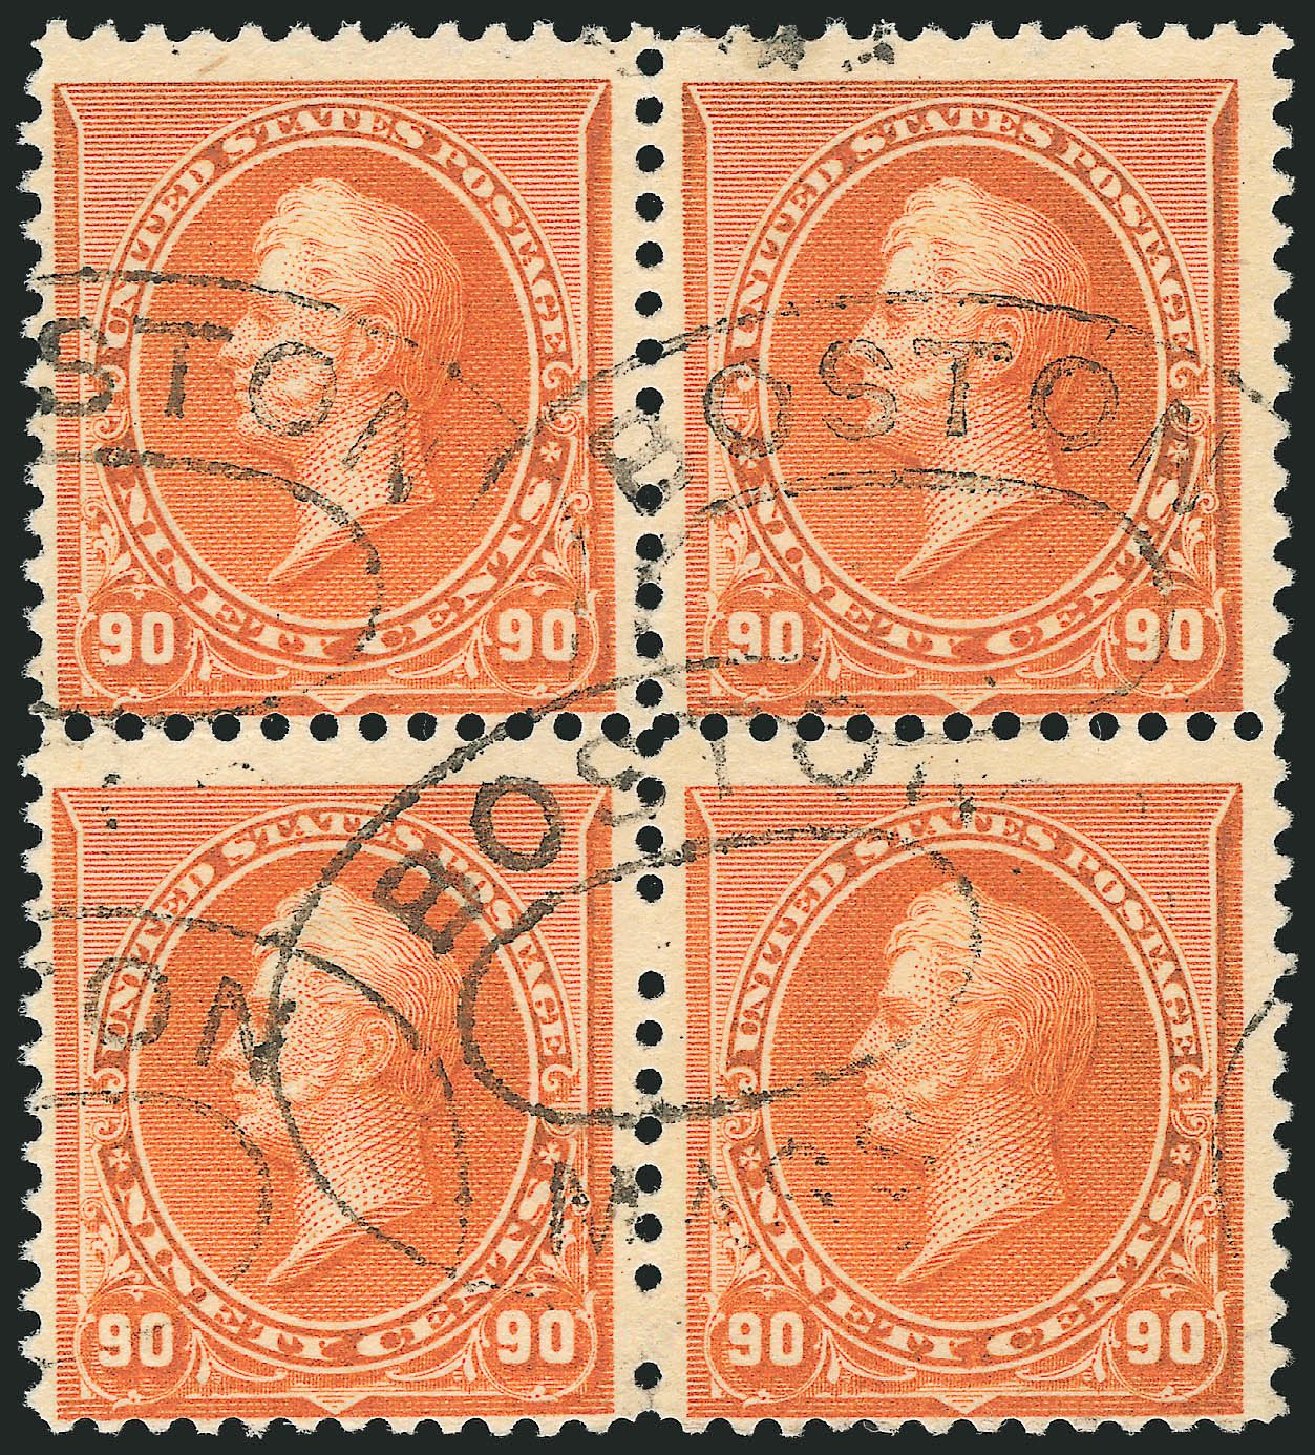 US Stamp Price Scott Catalogue 229 - 1890 90c Perry. Robert Siegel Auction Galleries, Dec 2014, Sale 1090, Lot 1383